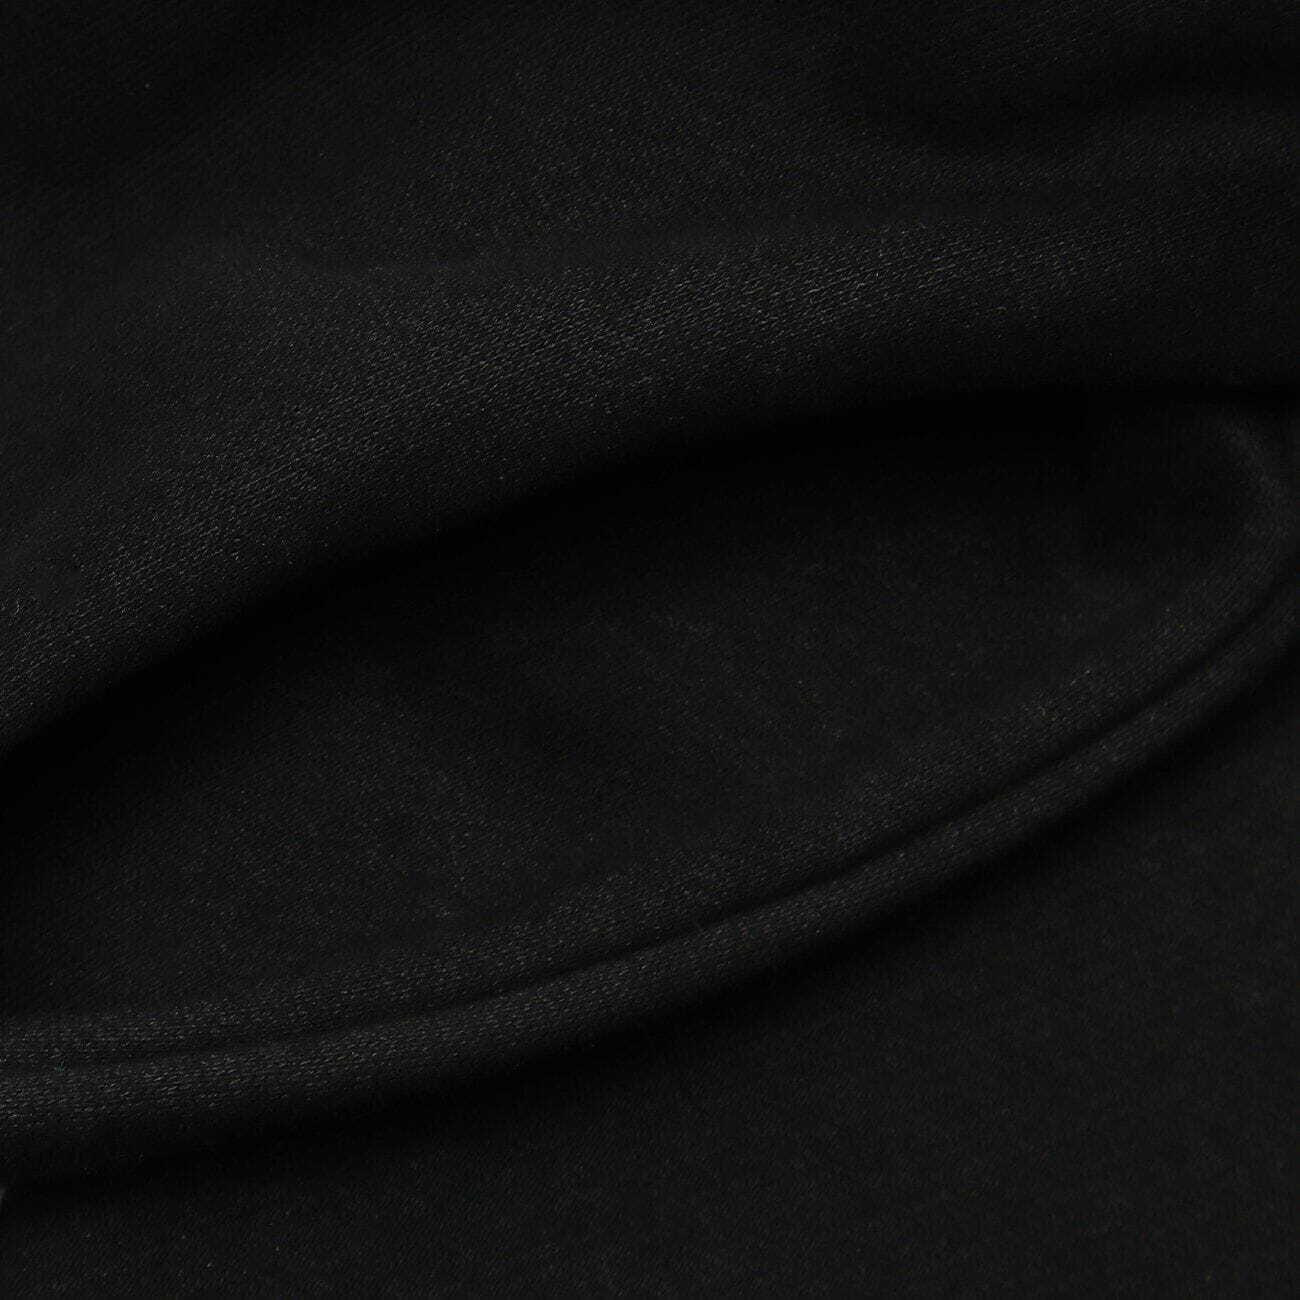 bear letter print hoodie edgy & vibrant streetwear 5454